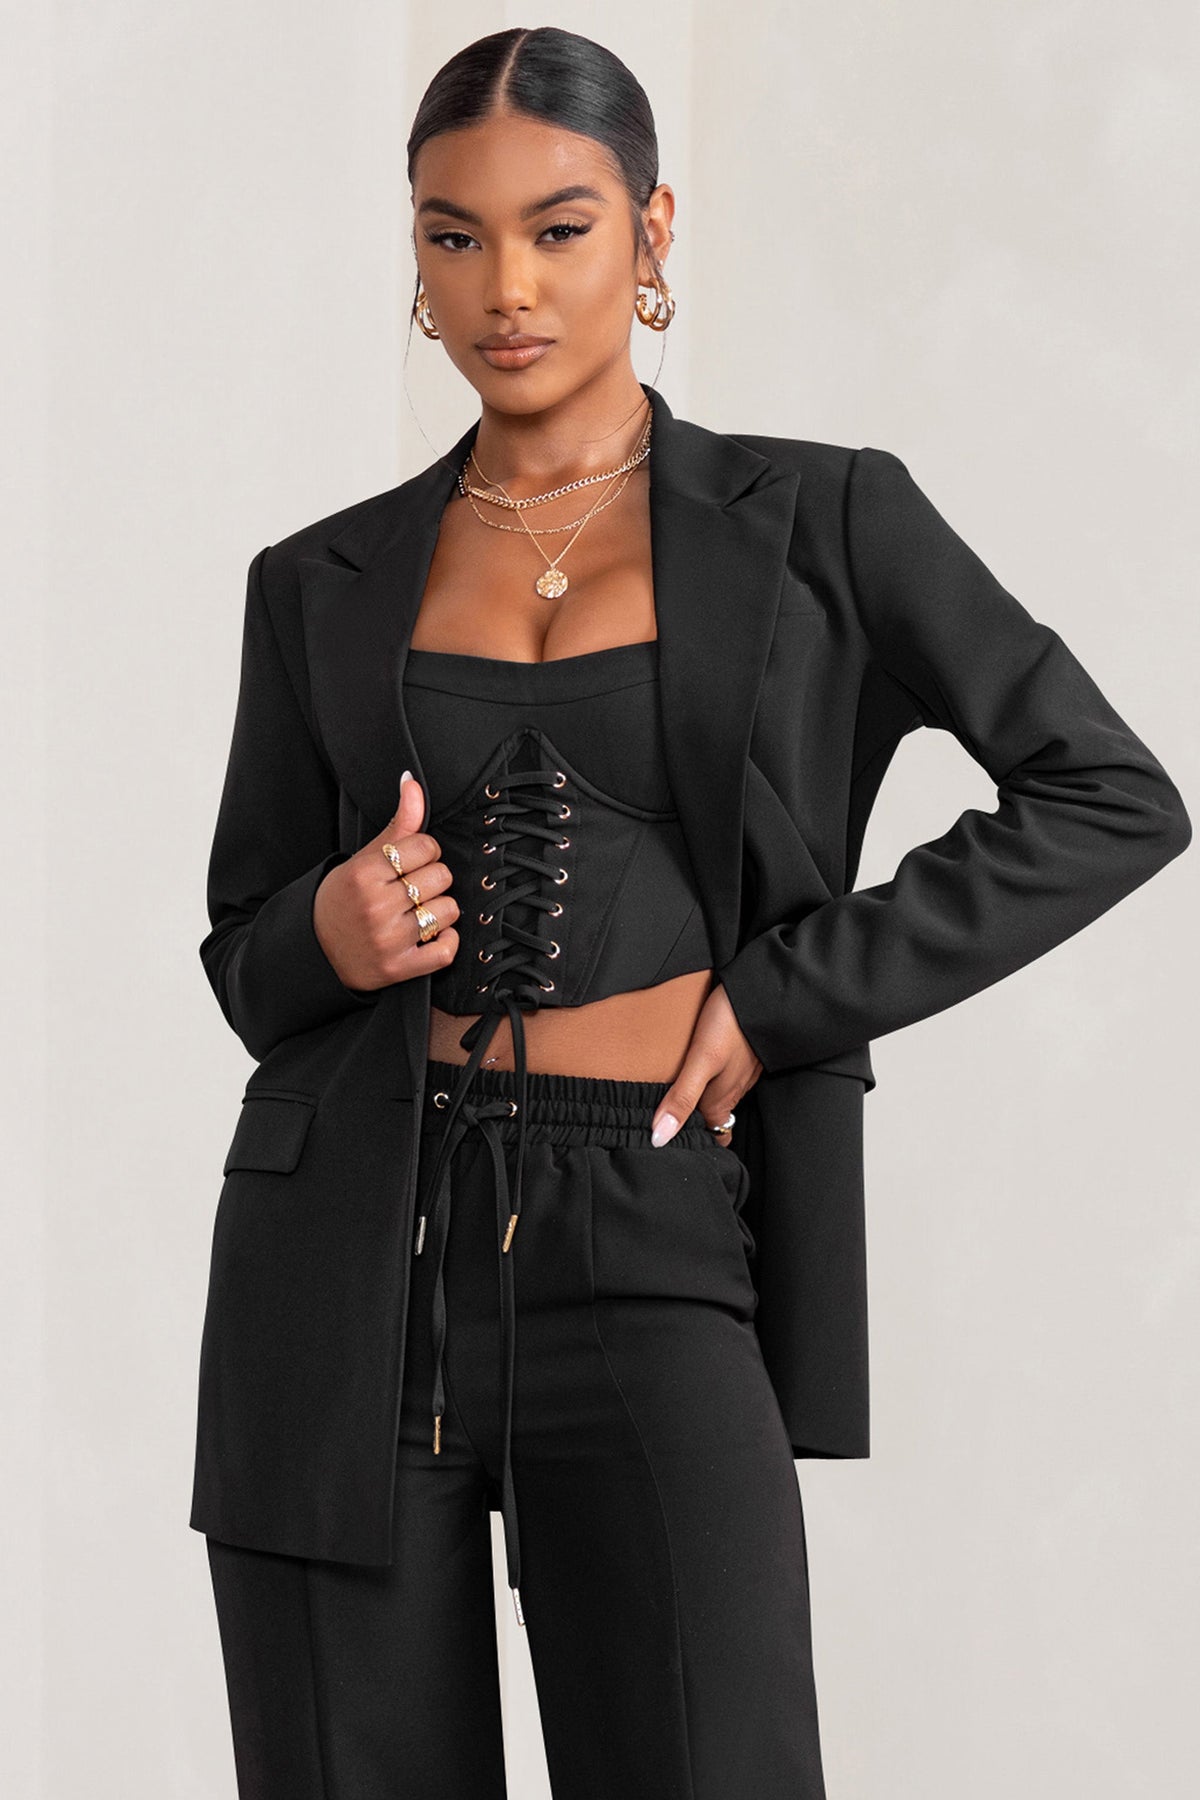 Missguided Lace Choker Detail Midi Dress Black, $81